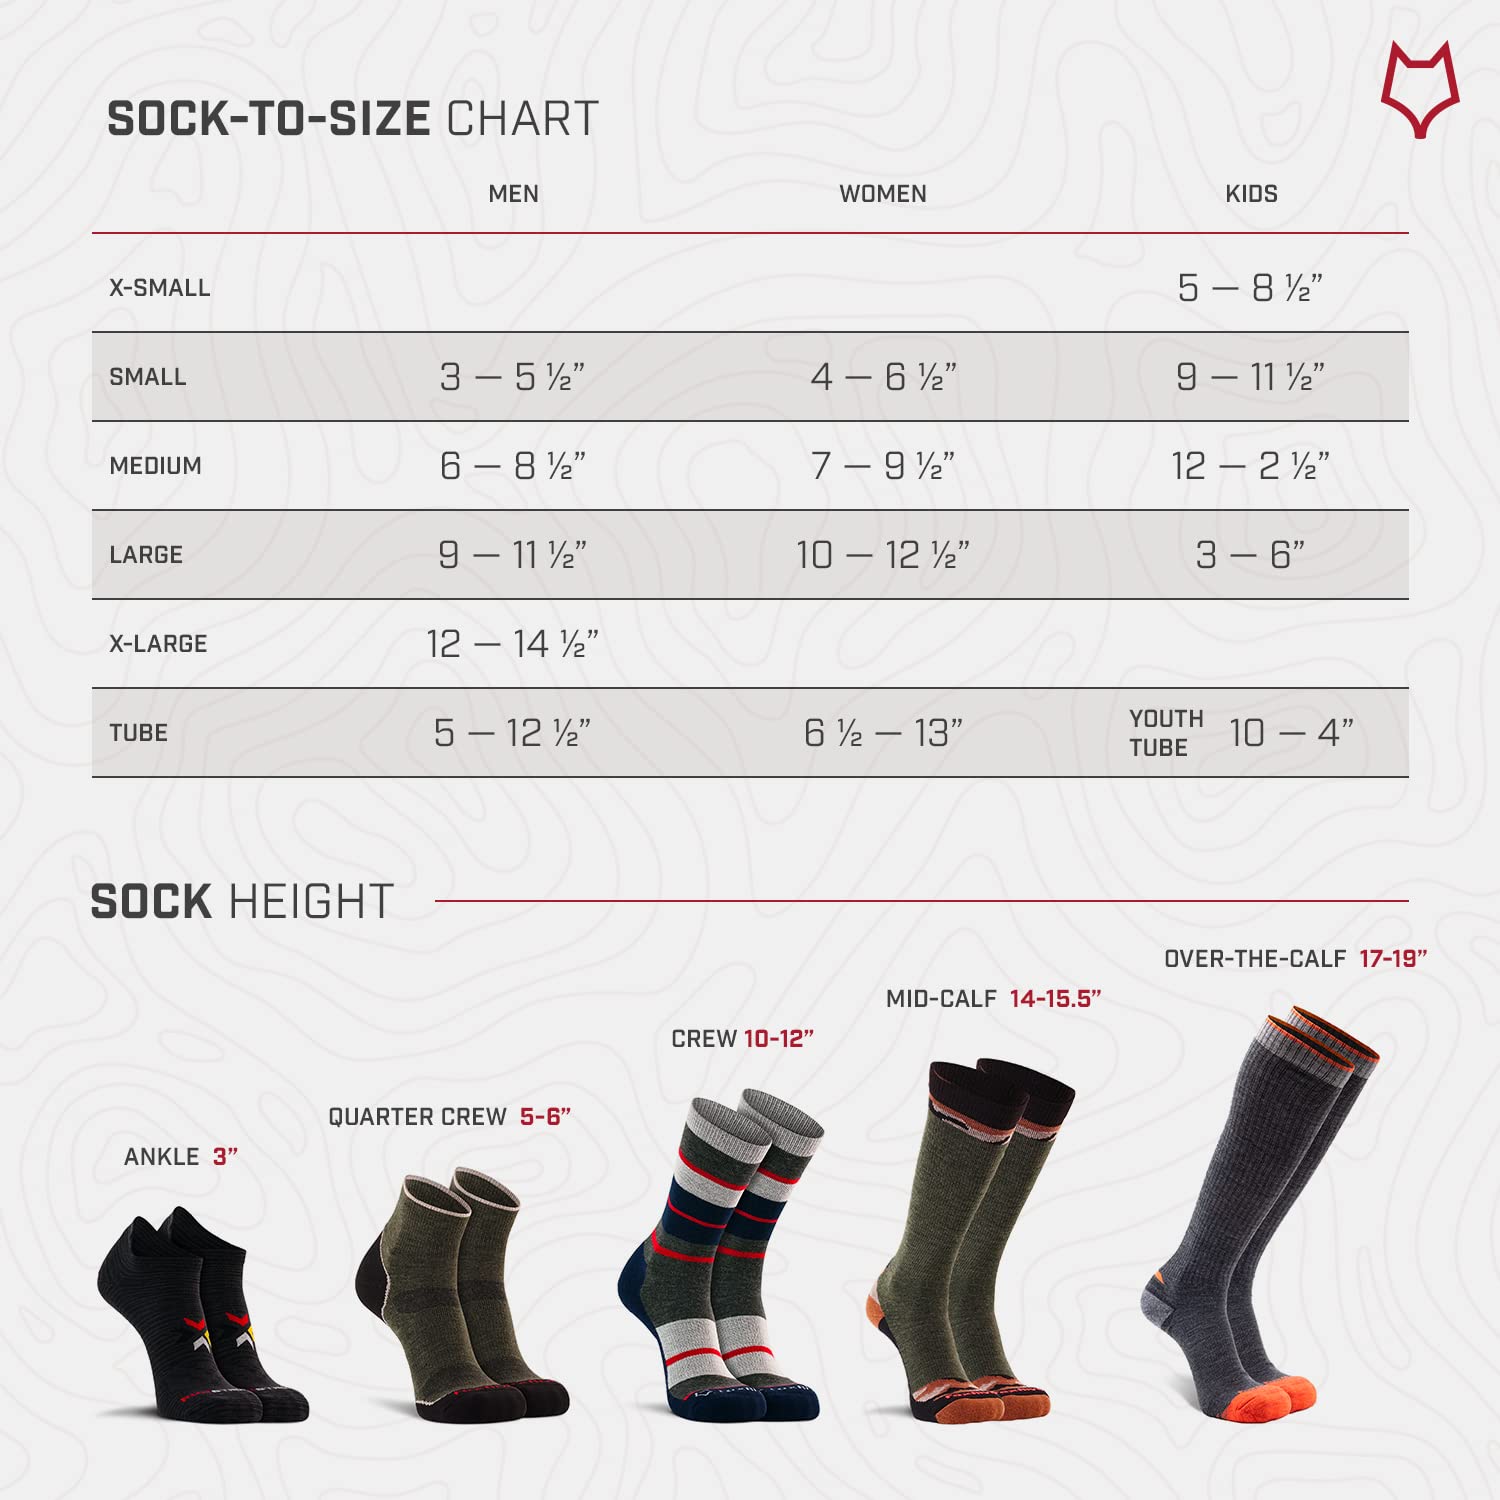 FoxRiver mens Wick Dry Coolmax Ultra-lightweight Liner Crew Socks